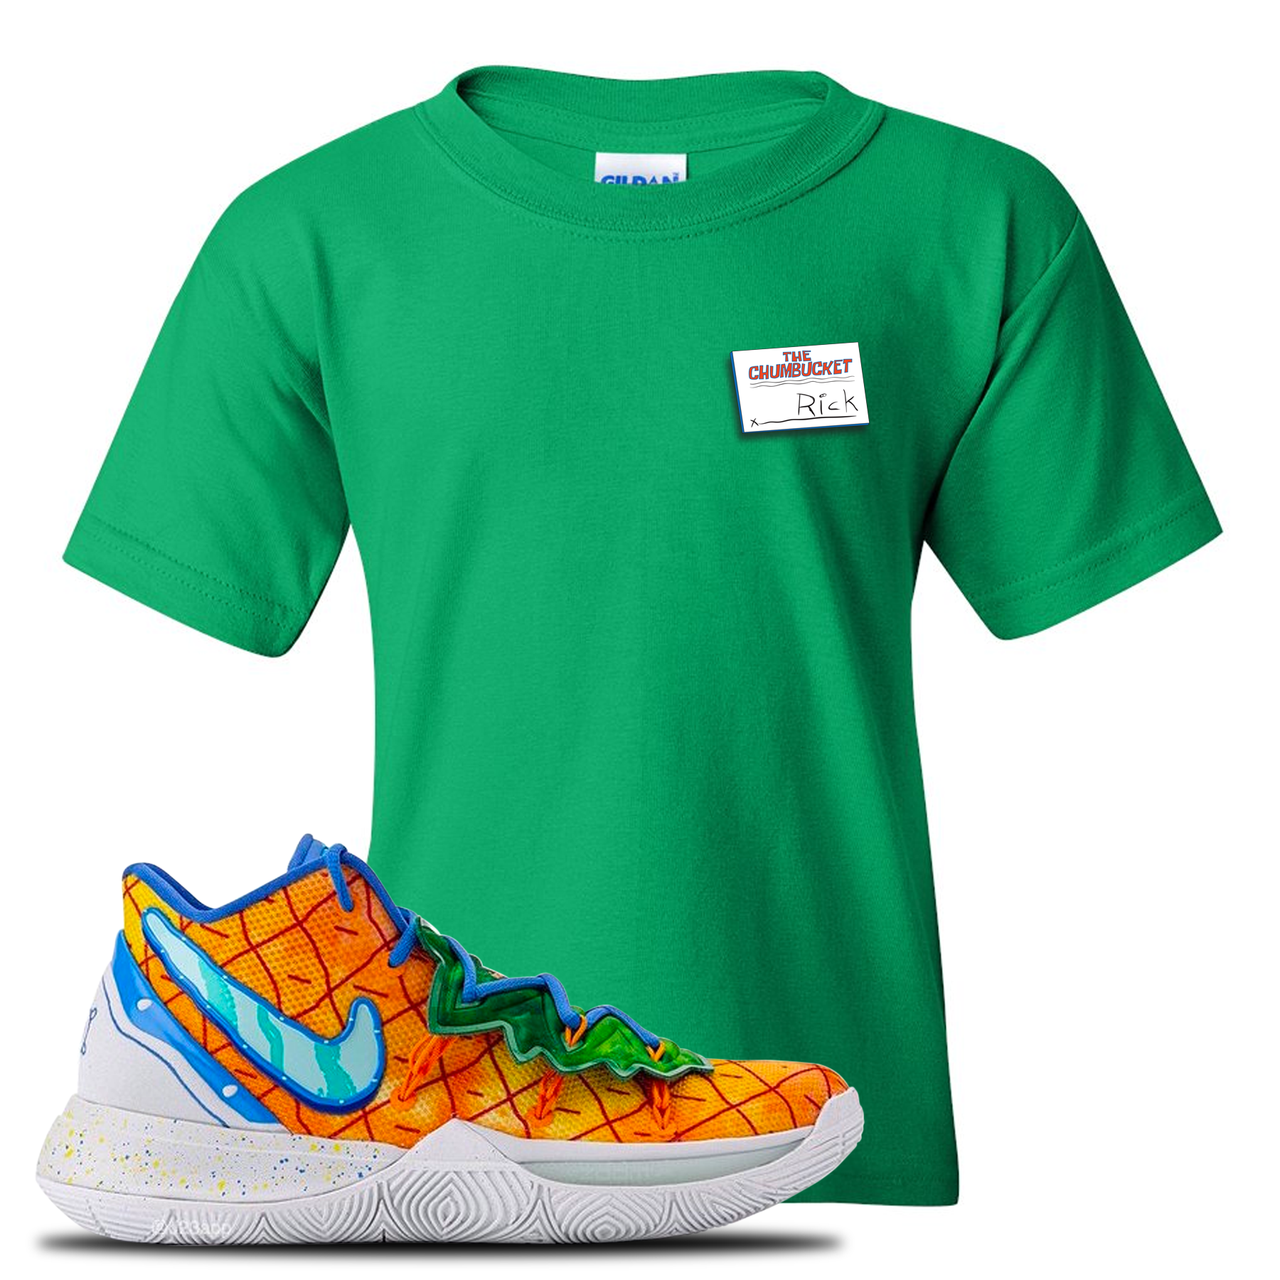 Kyrie 5 Pineapple House Rick Irish Green Sneaker Hook Up Kid's T-Shirt